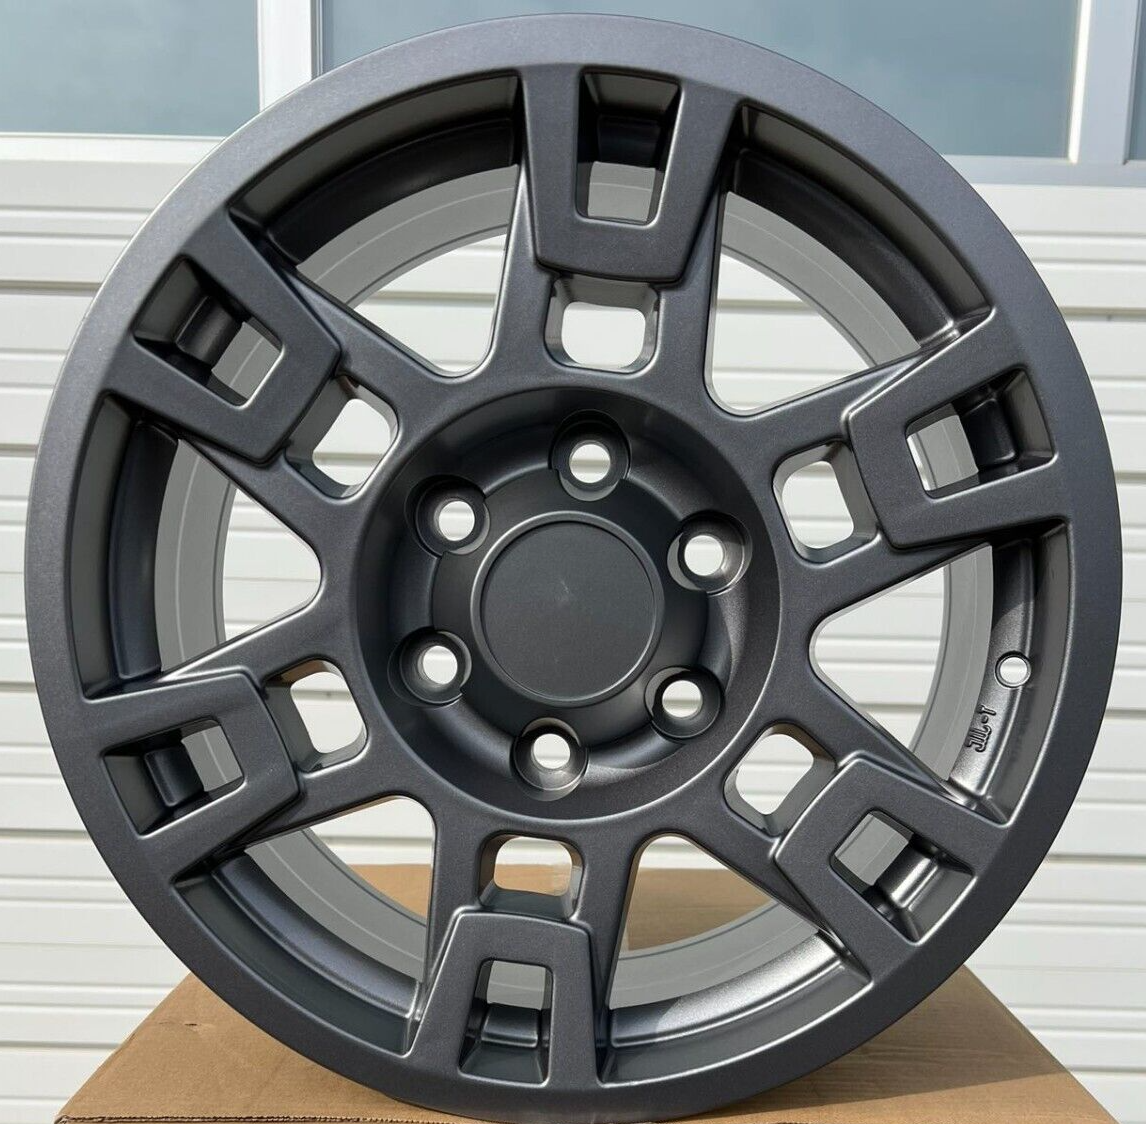 Wheels 17" x 9 Gunmetal Rims 1pcs